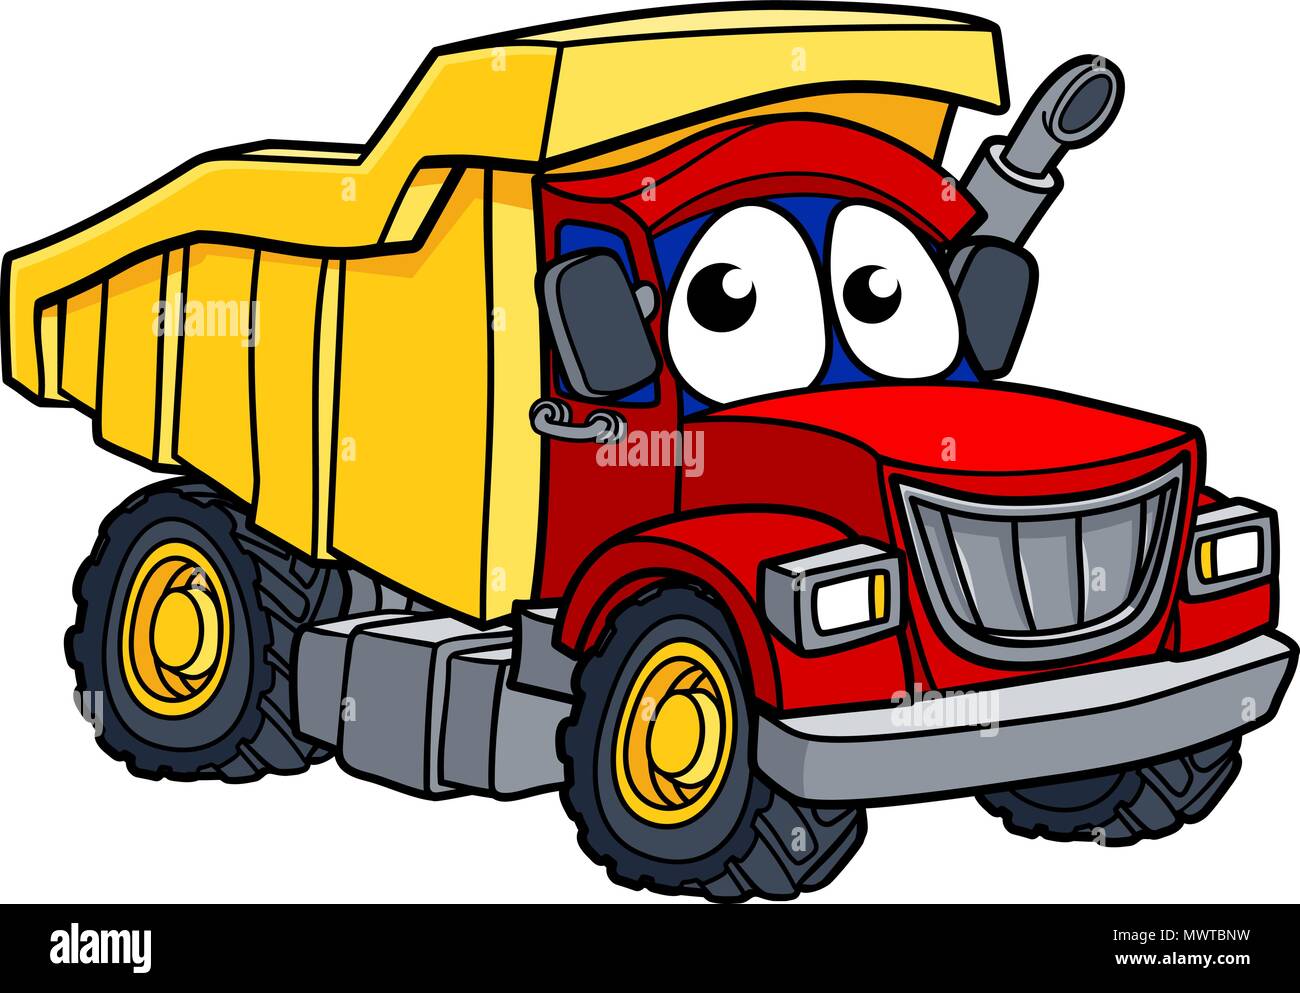 Cartoon dump truck hi-res stock photography and images - Alamy